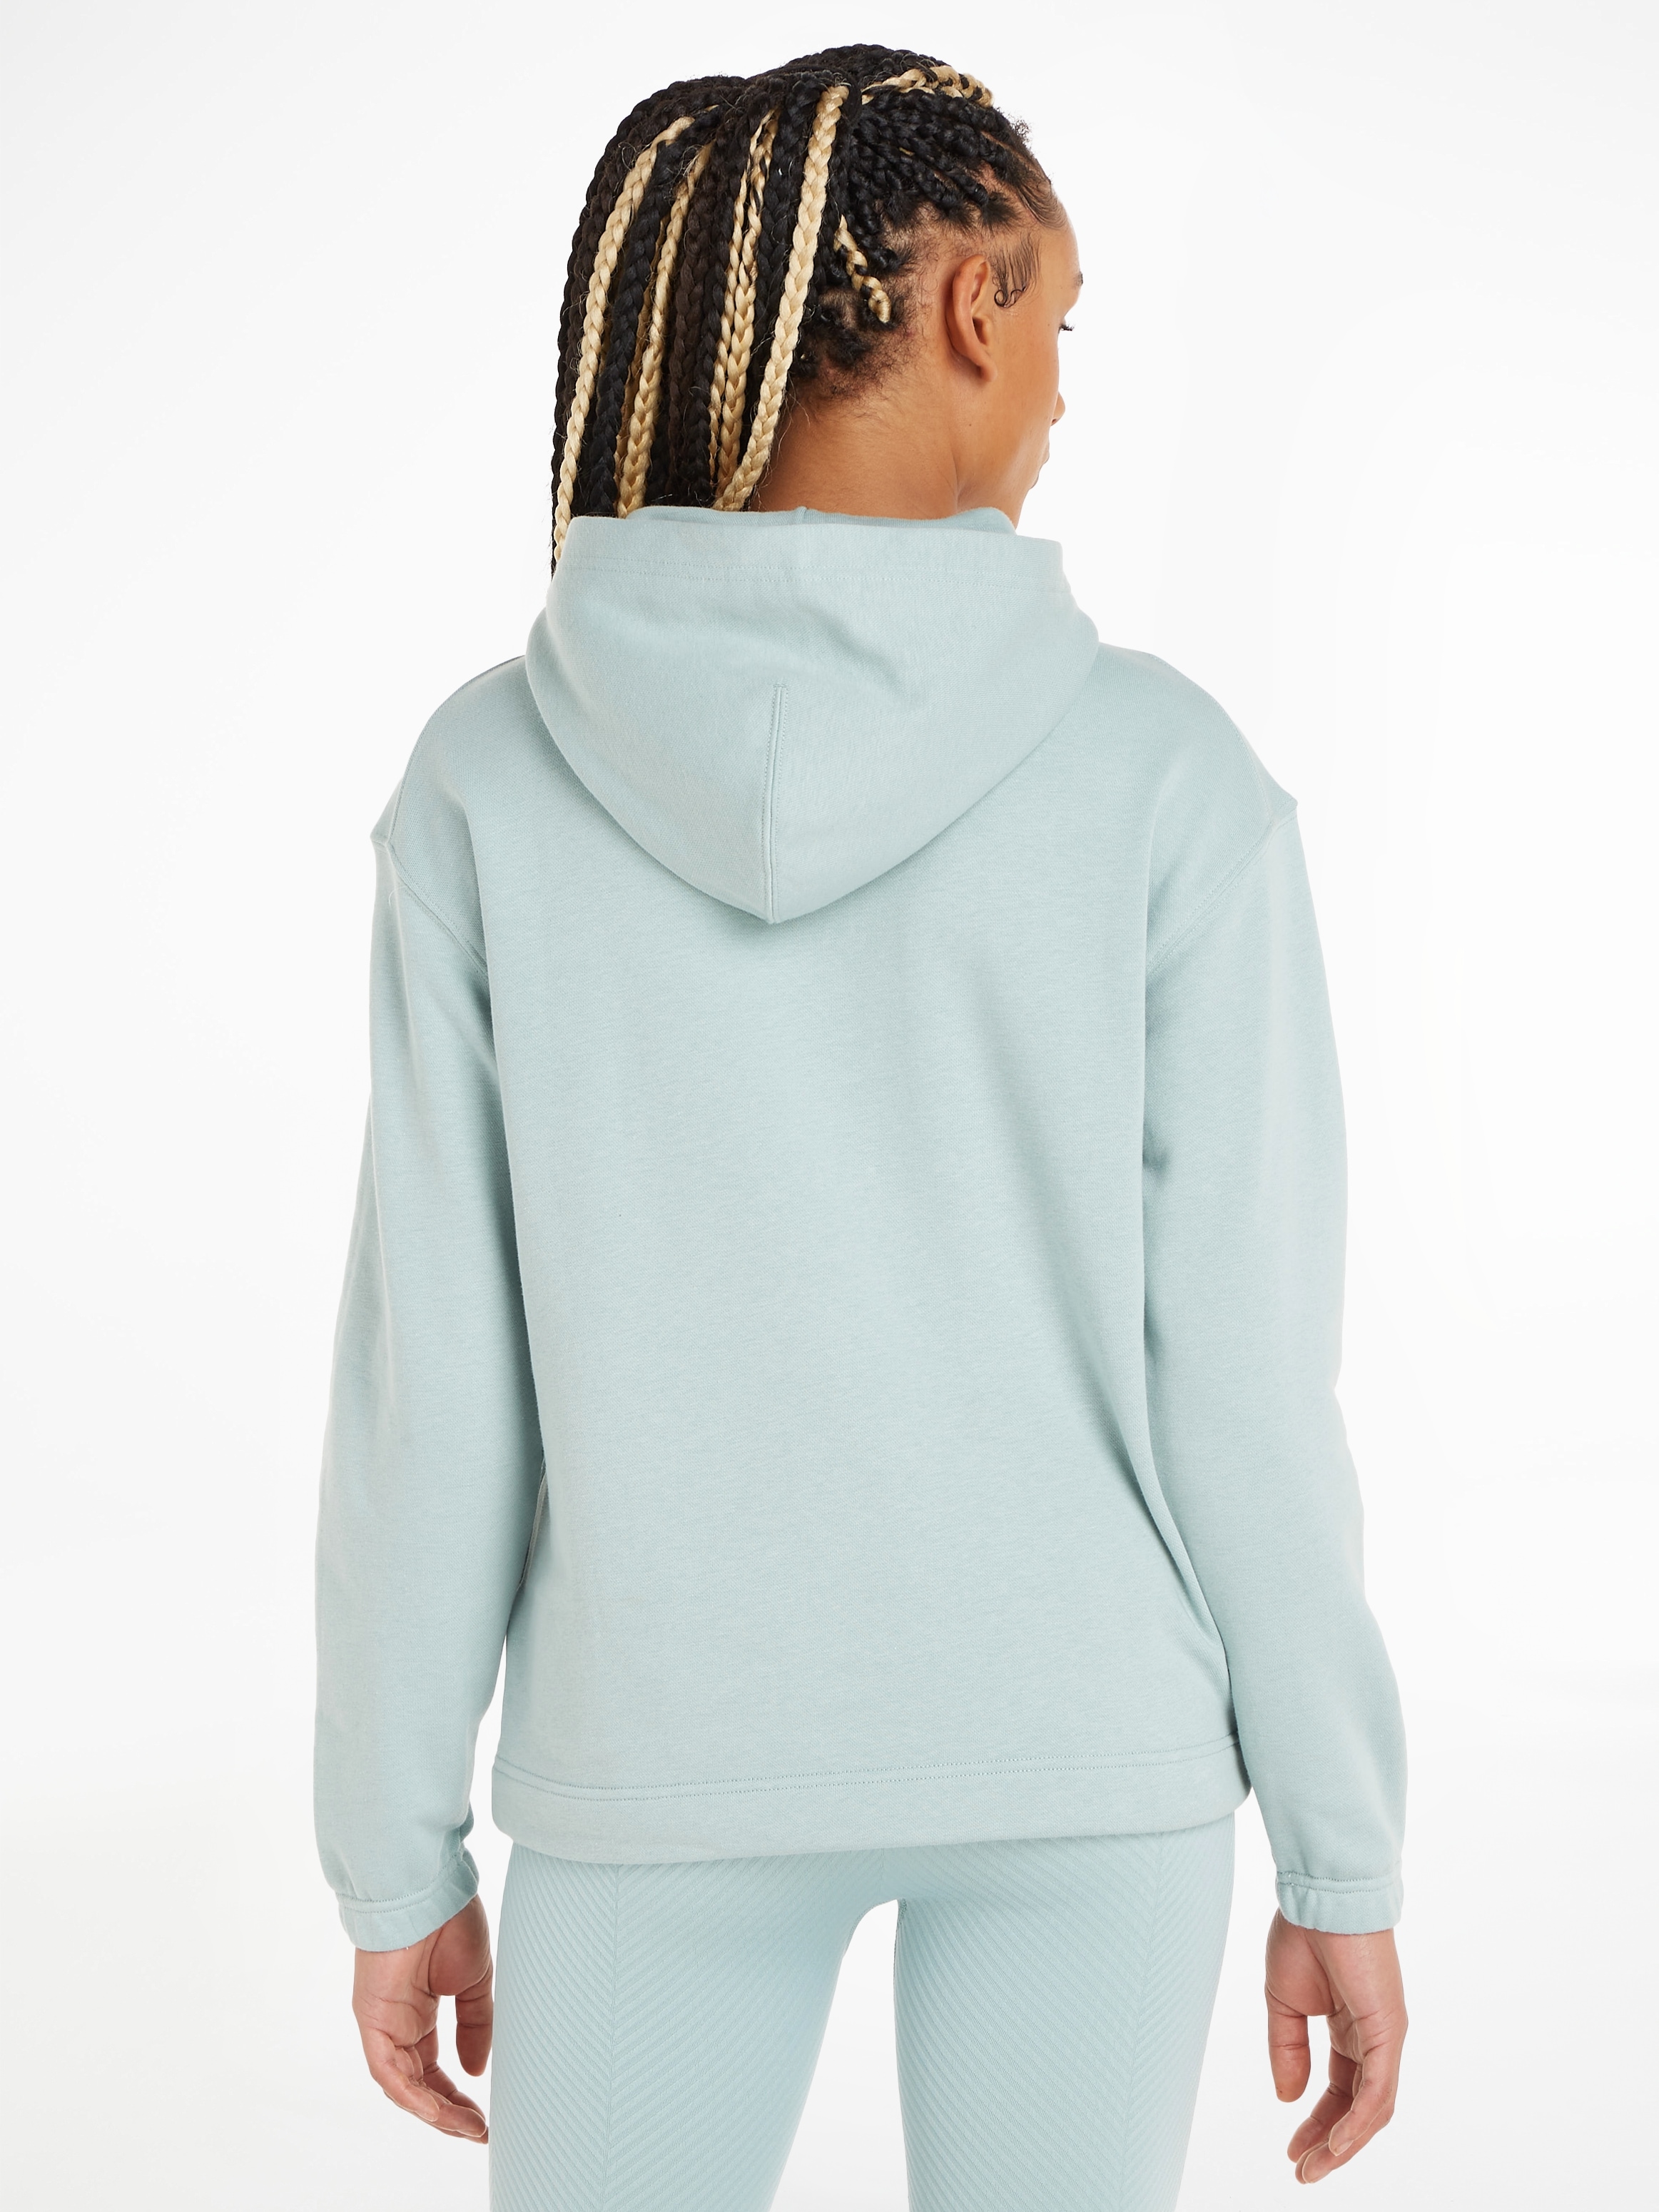 Calvin Klein Sport Kapuzensweatshirt »Sweatshirt Hoodie« PW - bei